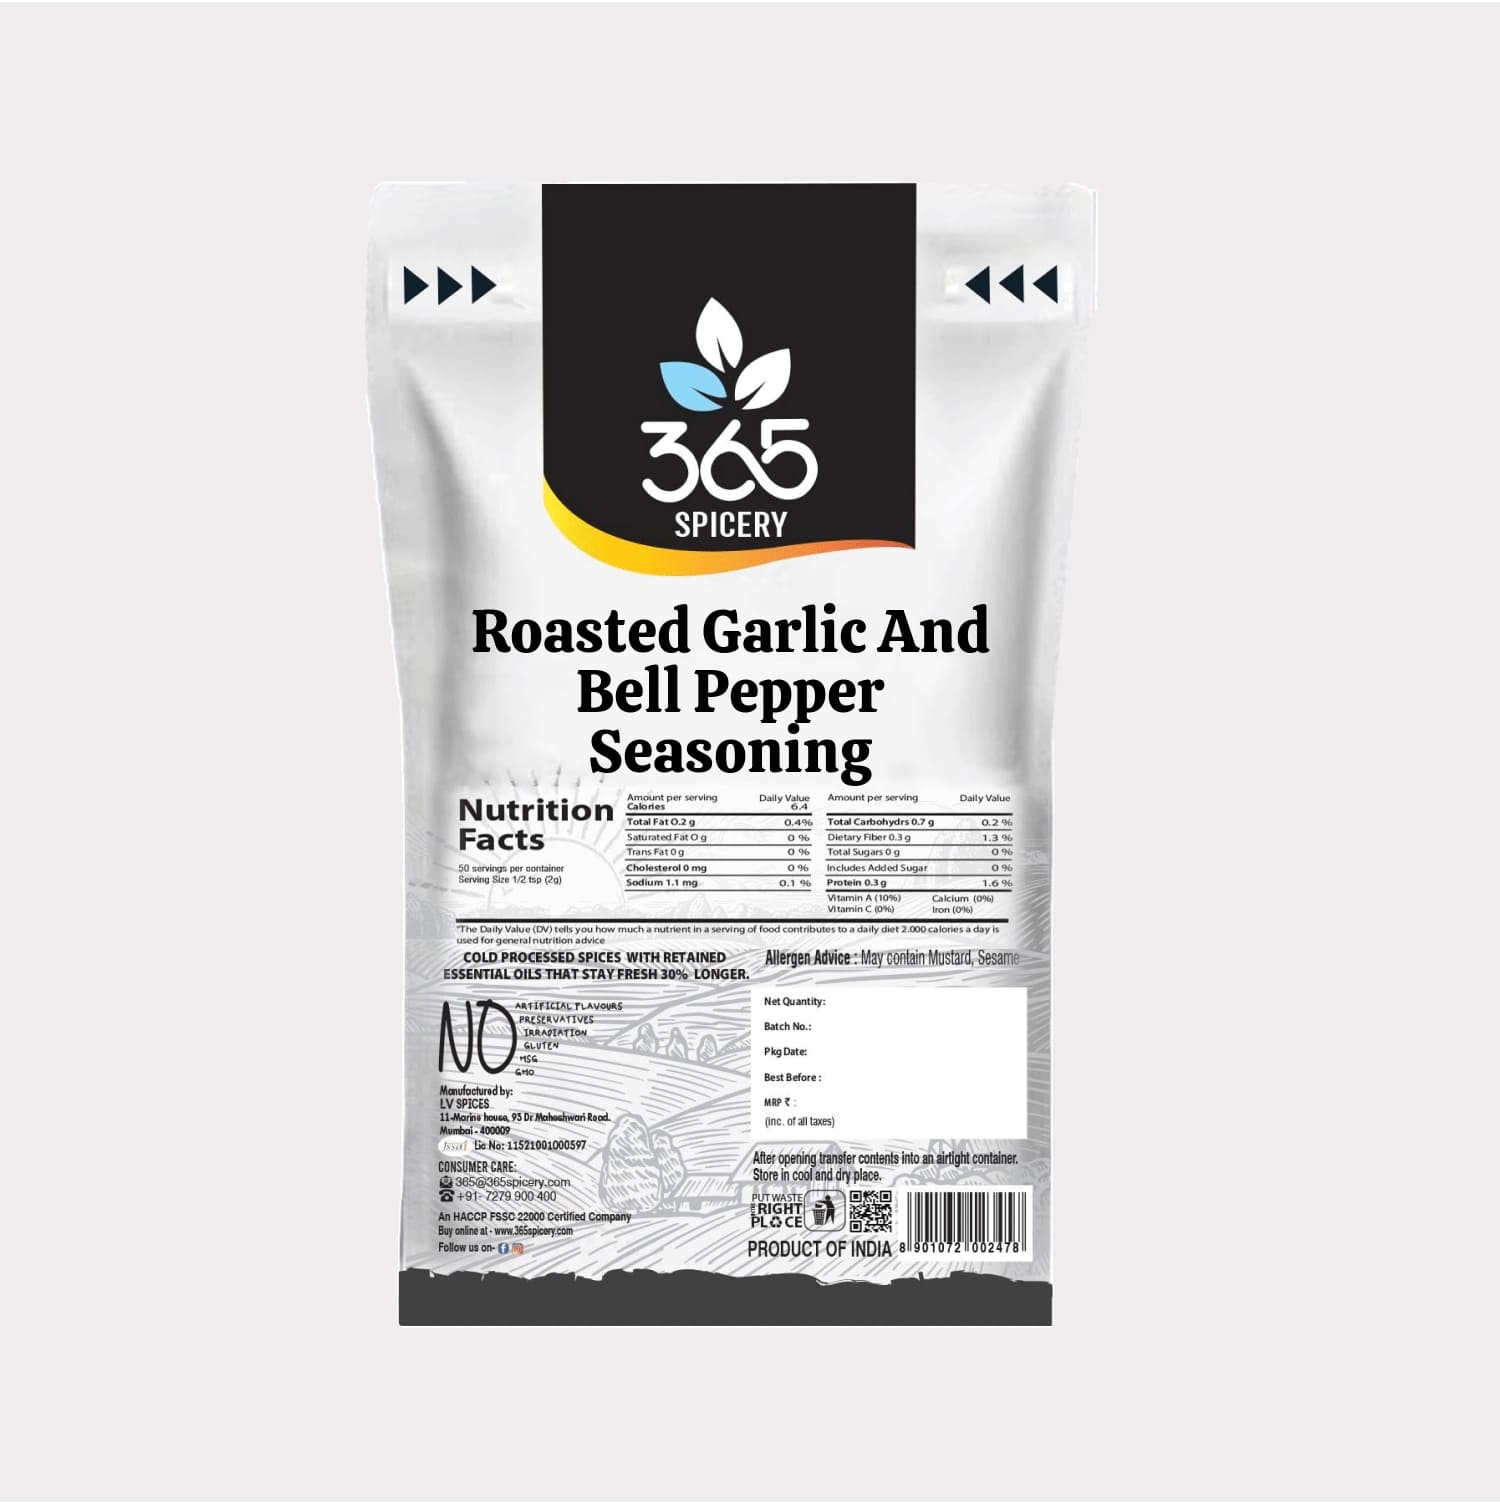 Roasted Garlic And Bell Pepper Seasoning